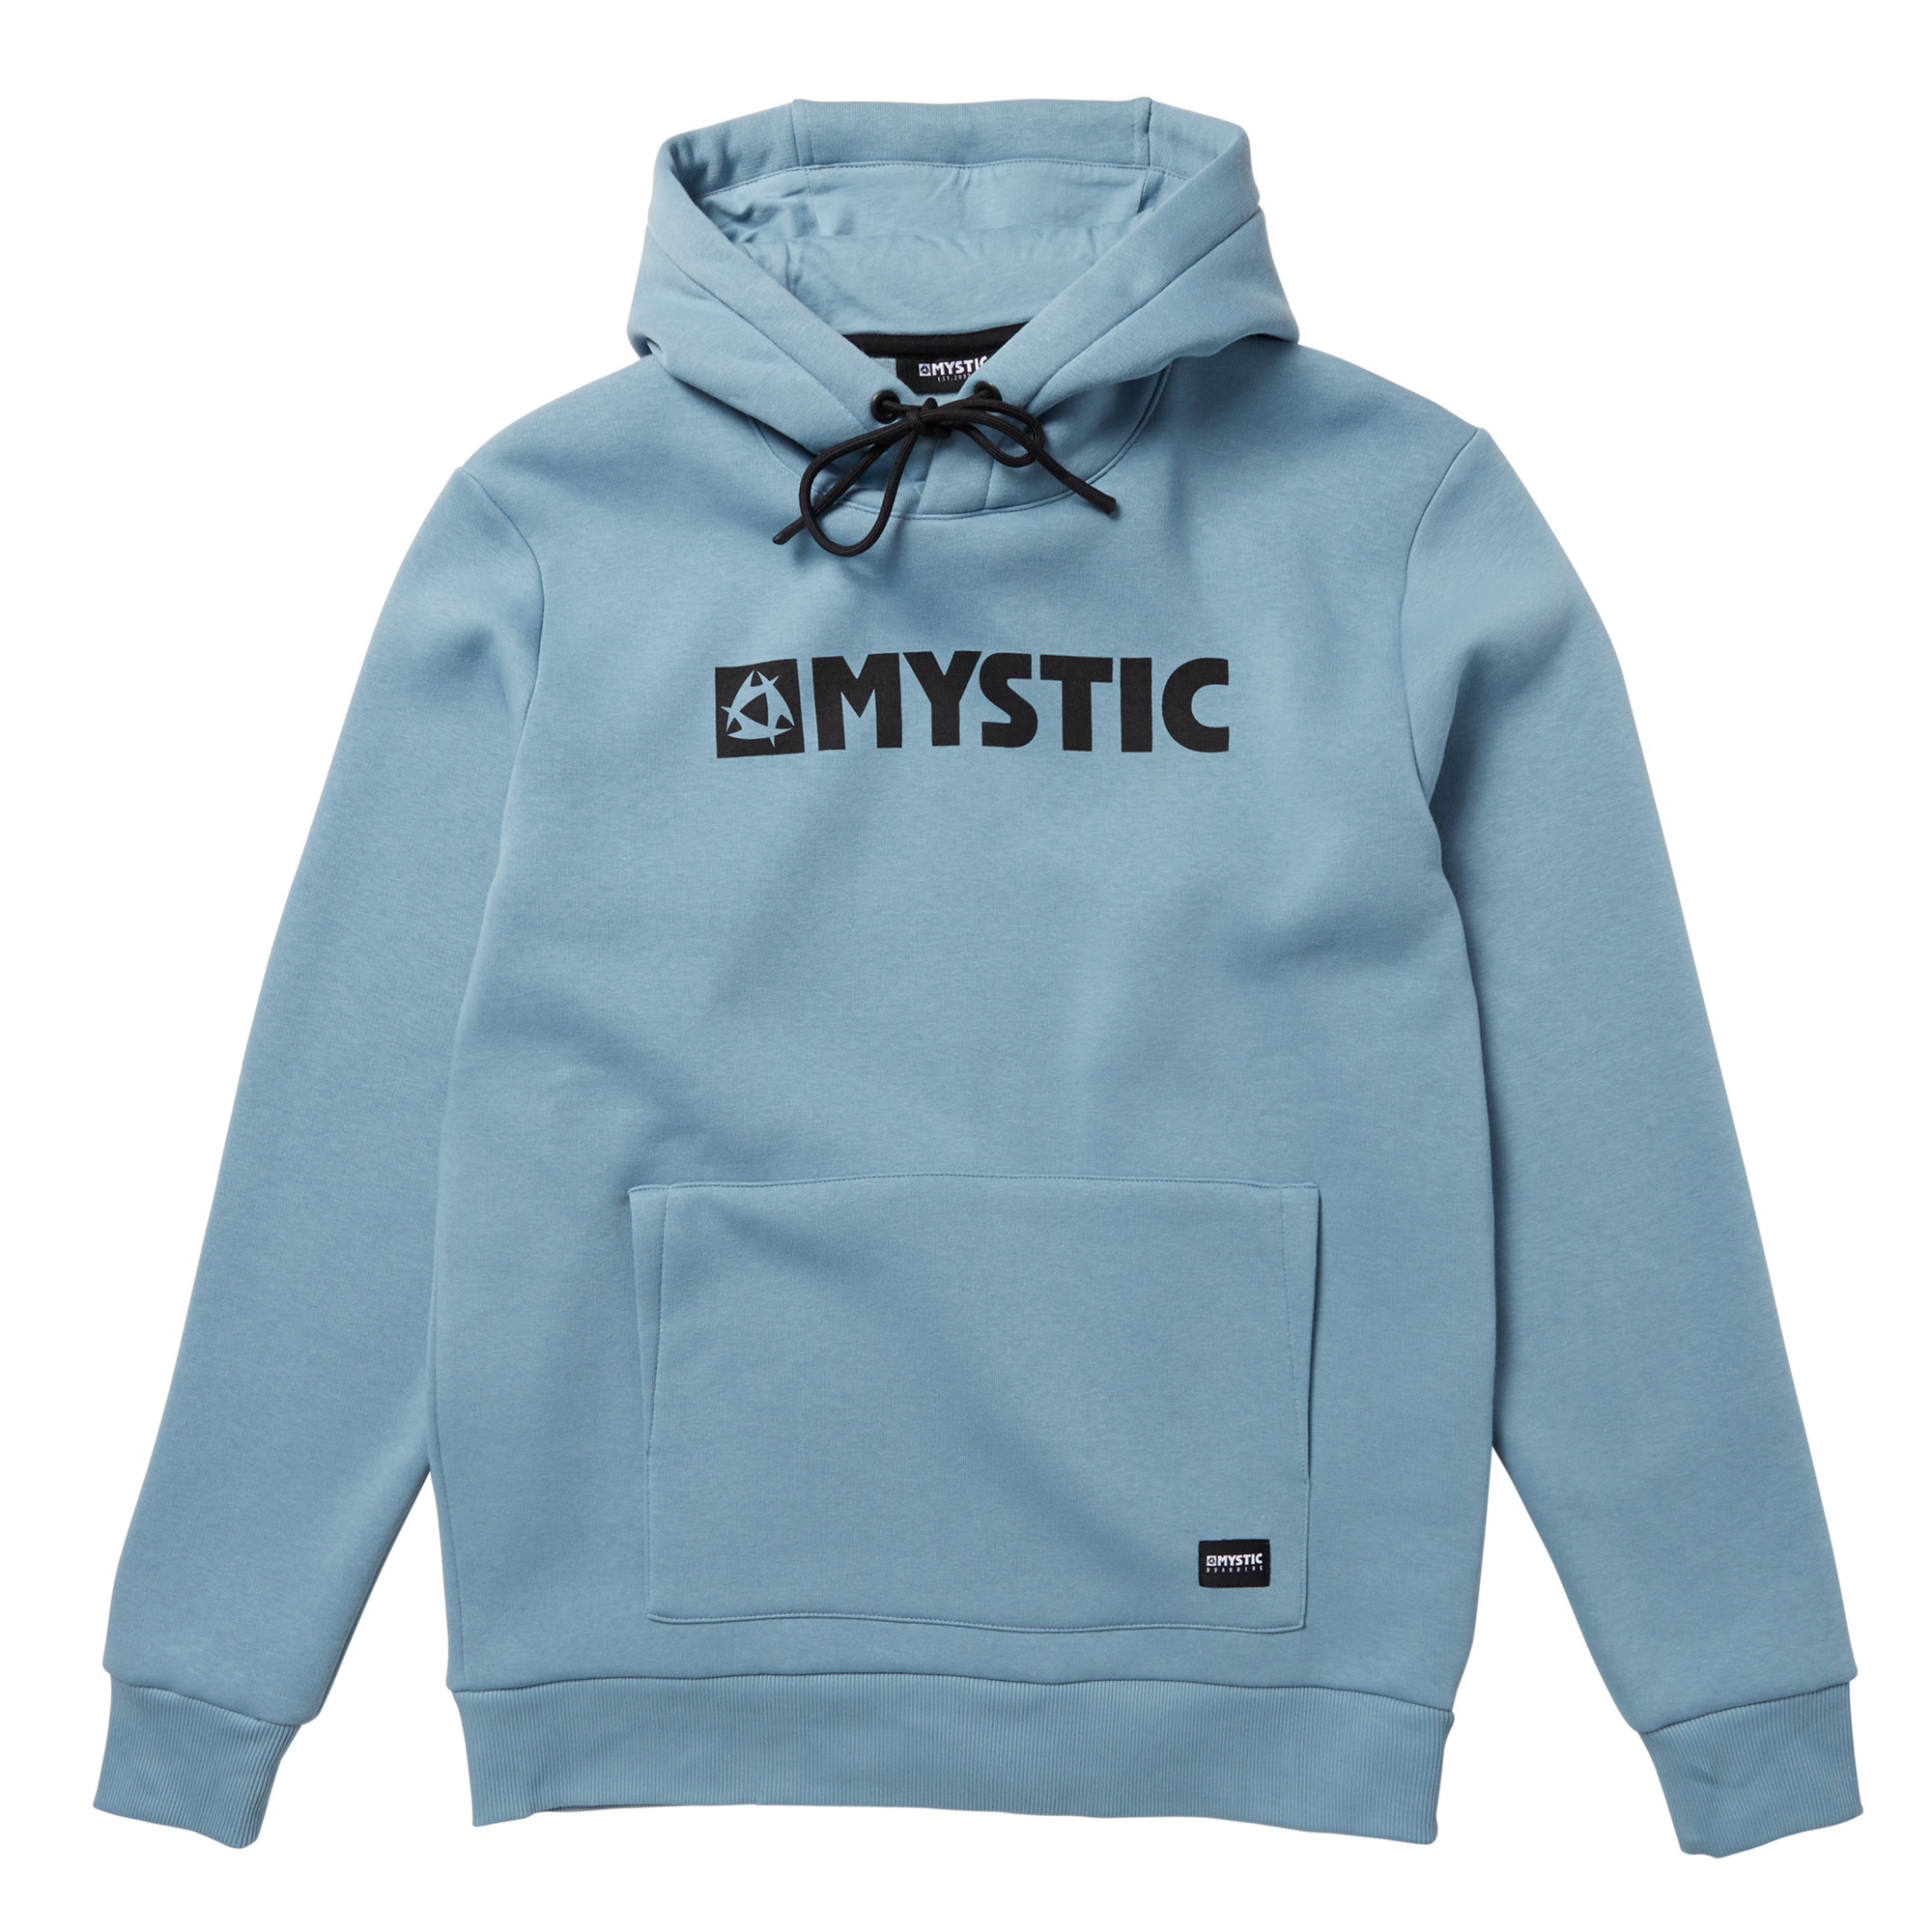 Mystic Brand Hood sweater grey blue